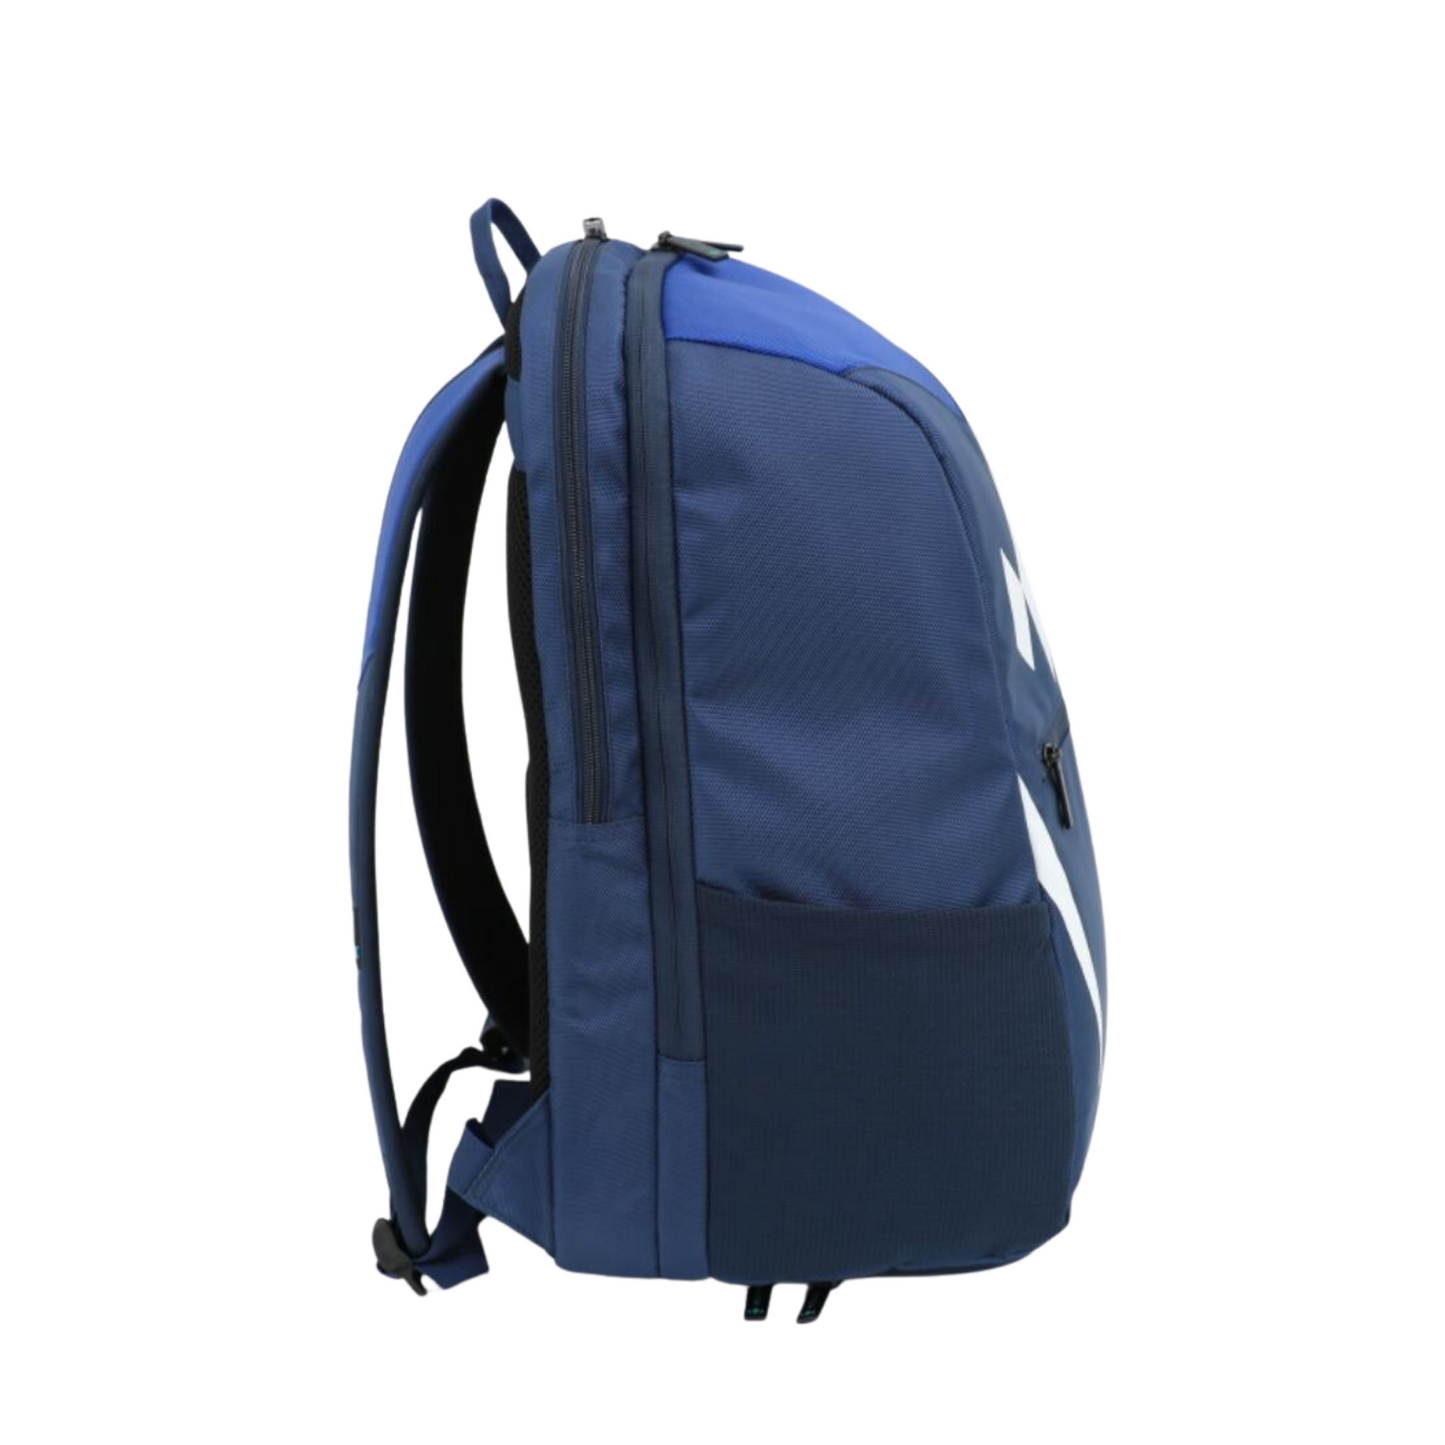 Diadem Elevate v3 Backpack by Diadem Sports